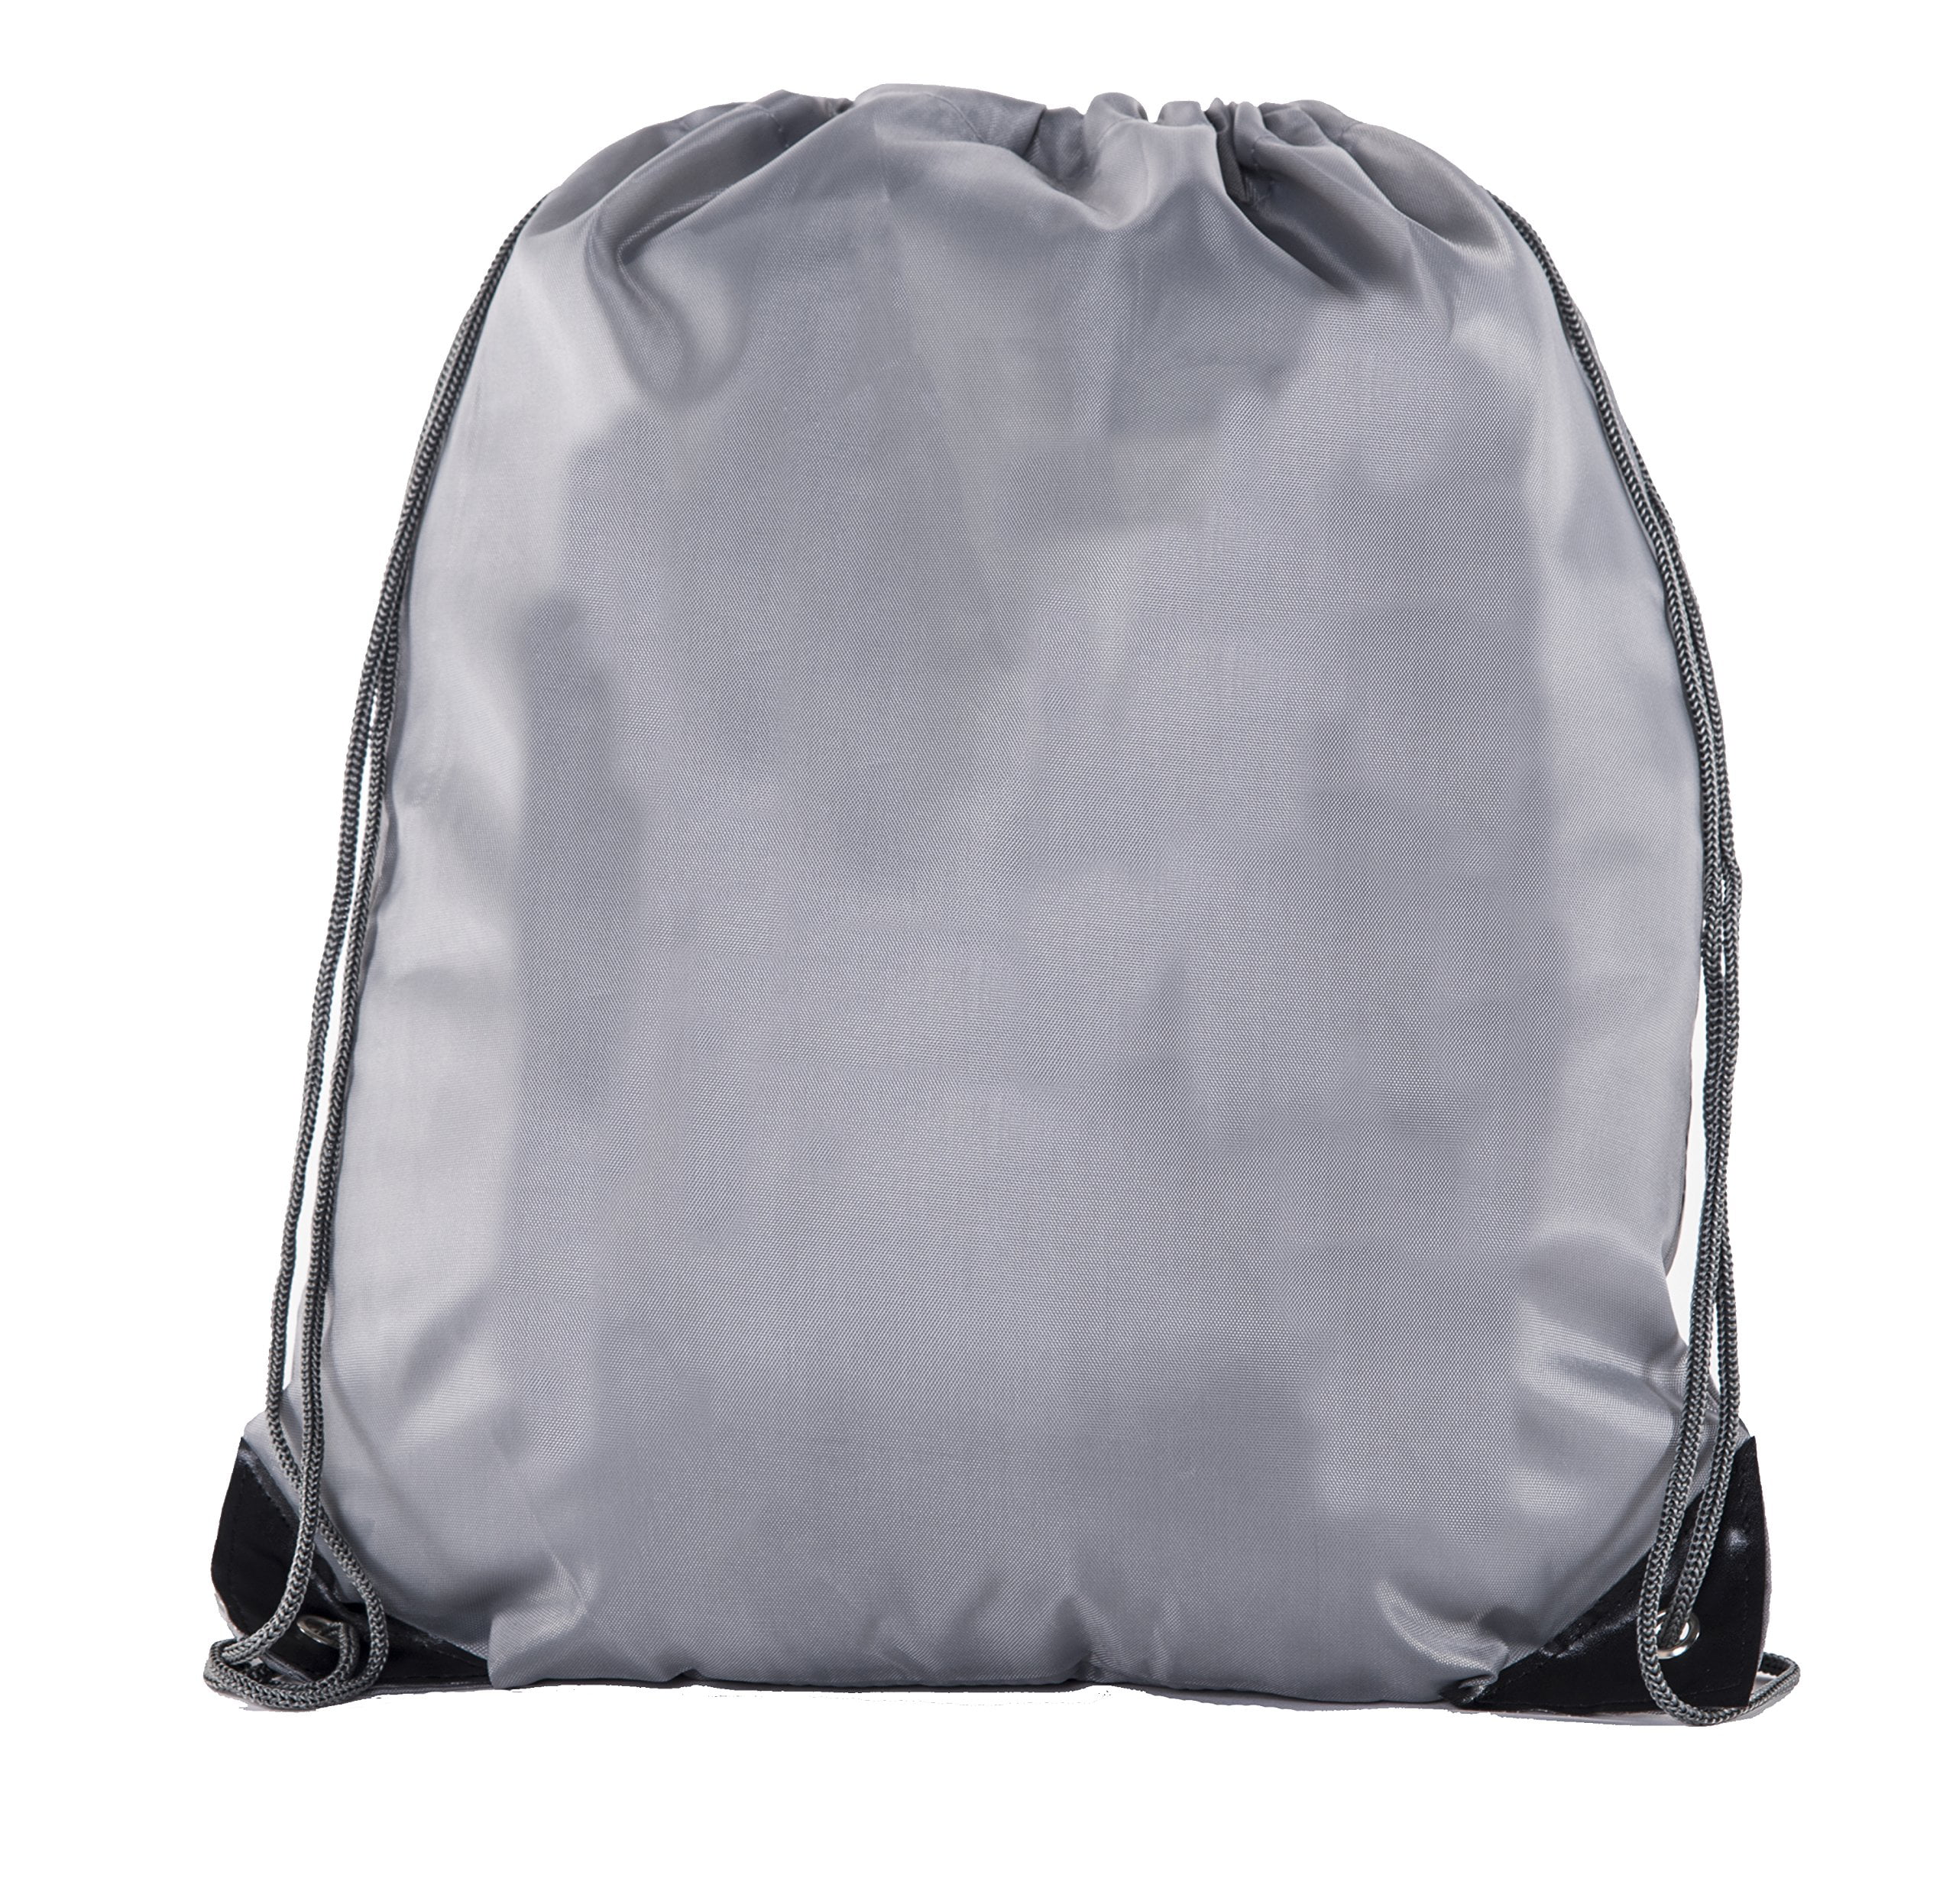 24 Pieces Polyester Drawstring Backpack Bags Machine Washable String Sport Bag Gym Backpack Bulk for School Gym Sport Traveling Black 